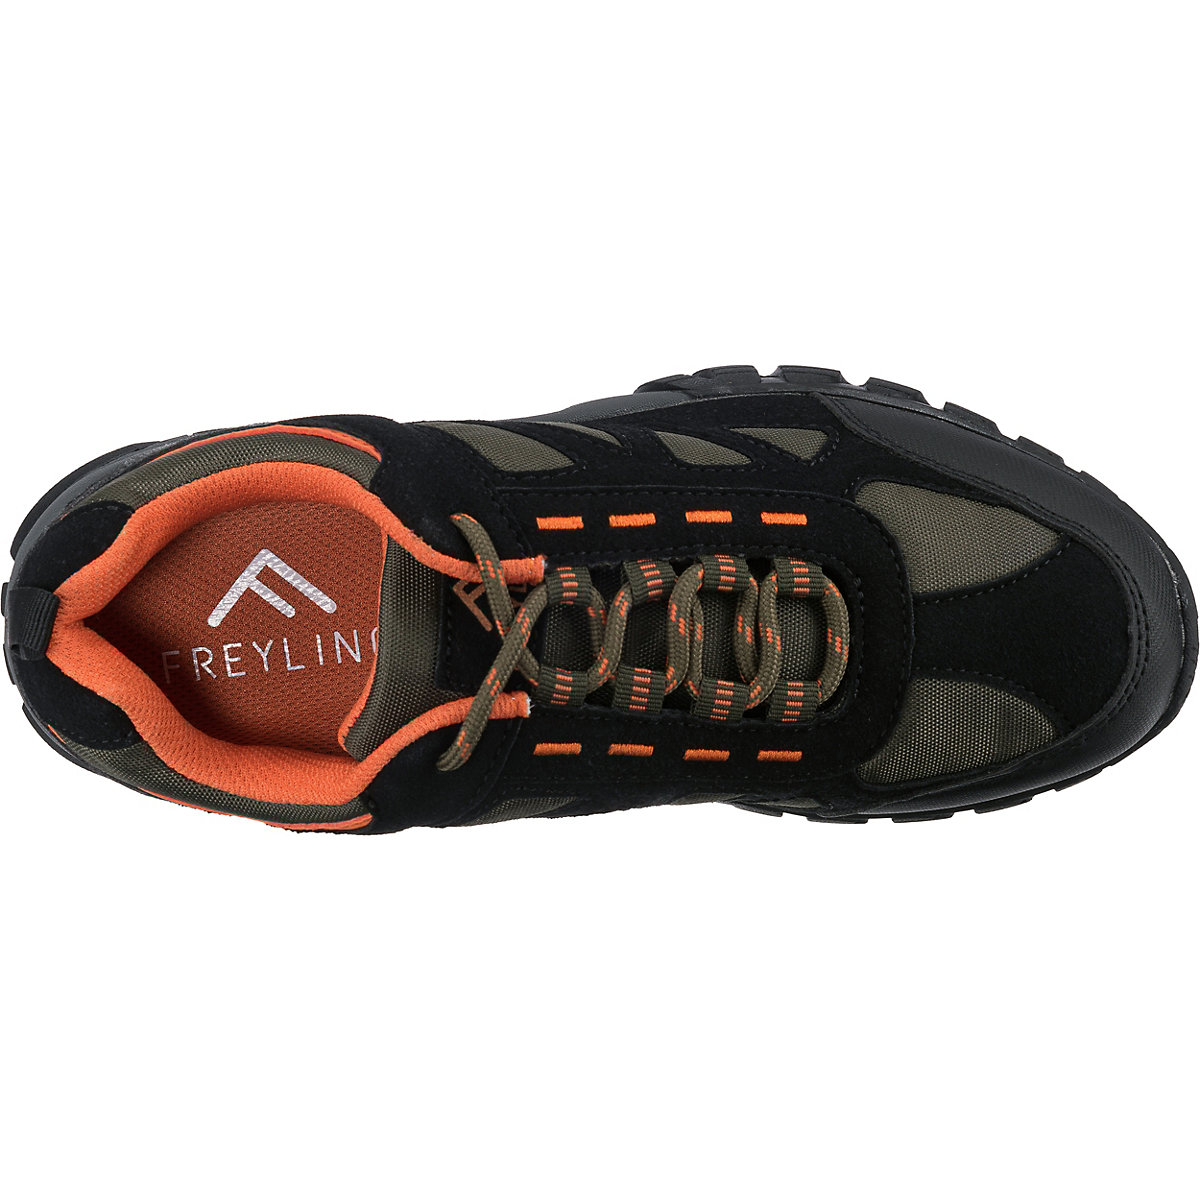 Freyling Soft Hike Ad-frey-venture Low Wanderschuhe khaki/orange UR9196